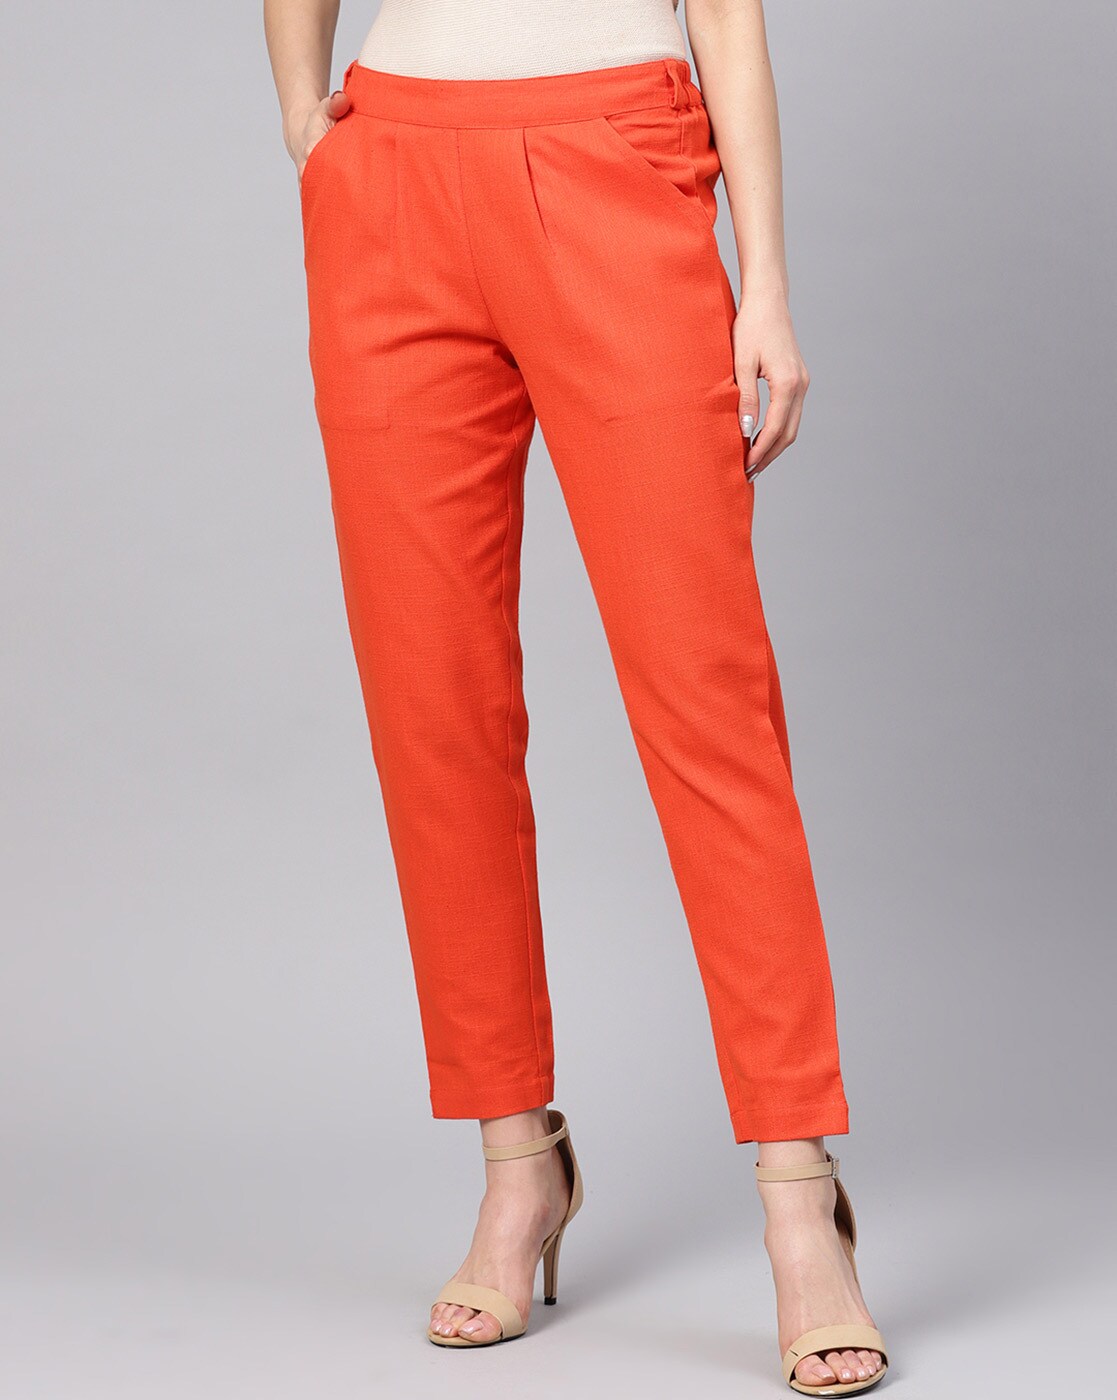 Ladies Plain Orange Cotton Pant